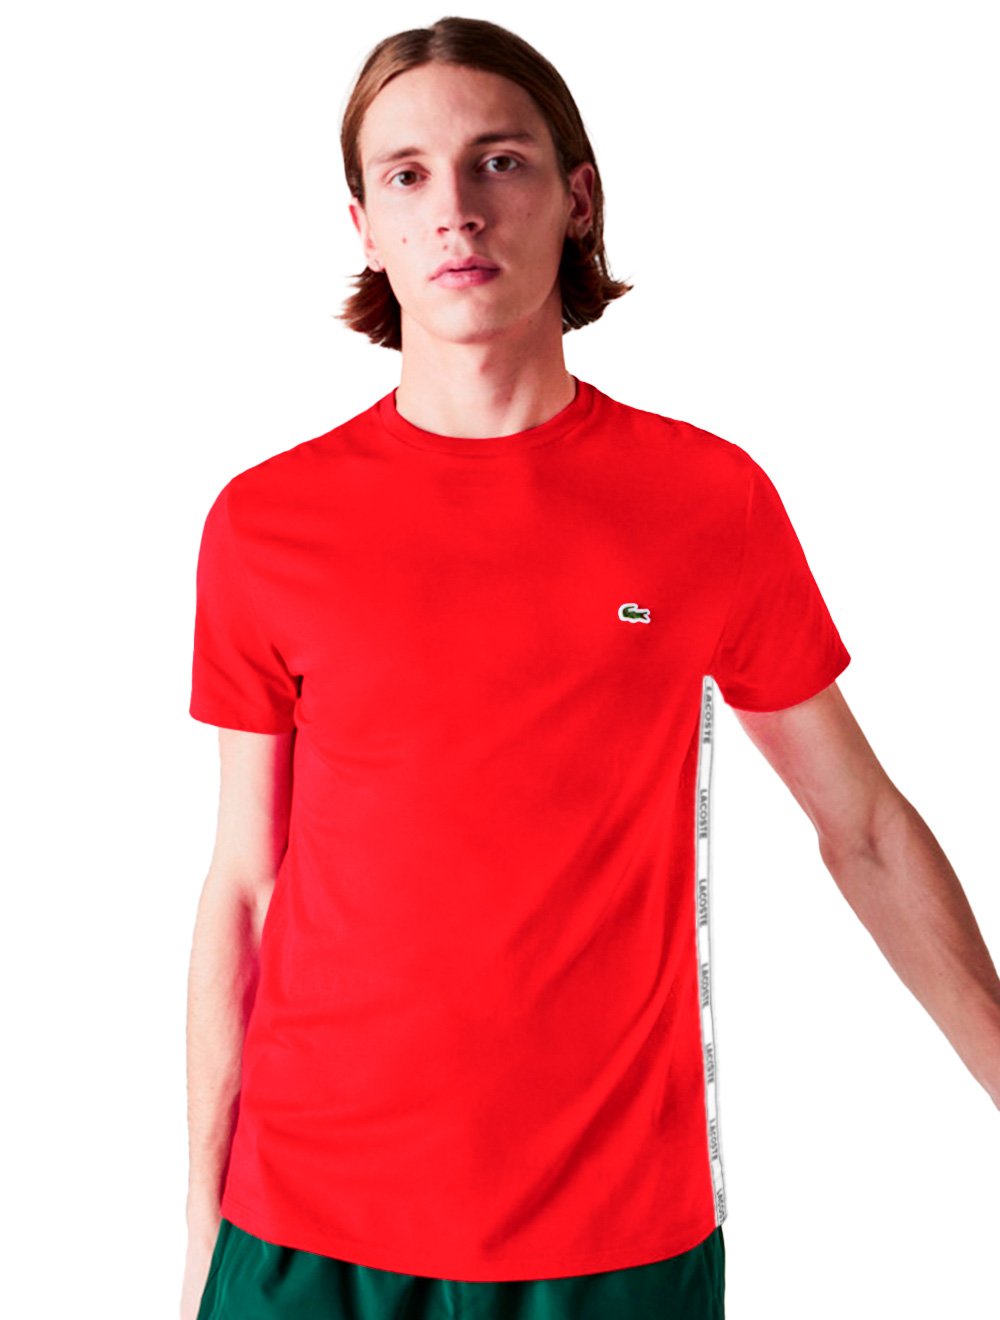 Camiseta Lacoste Masculina Sport Side Sash Logo Vermelha